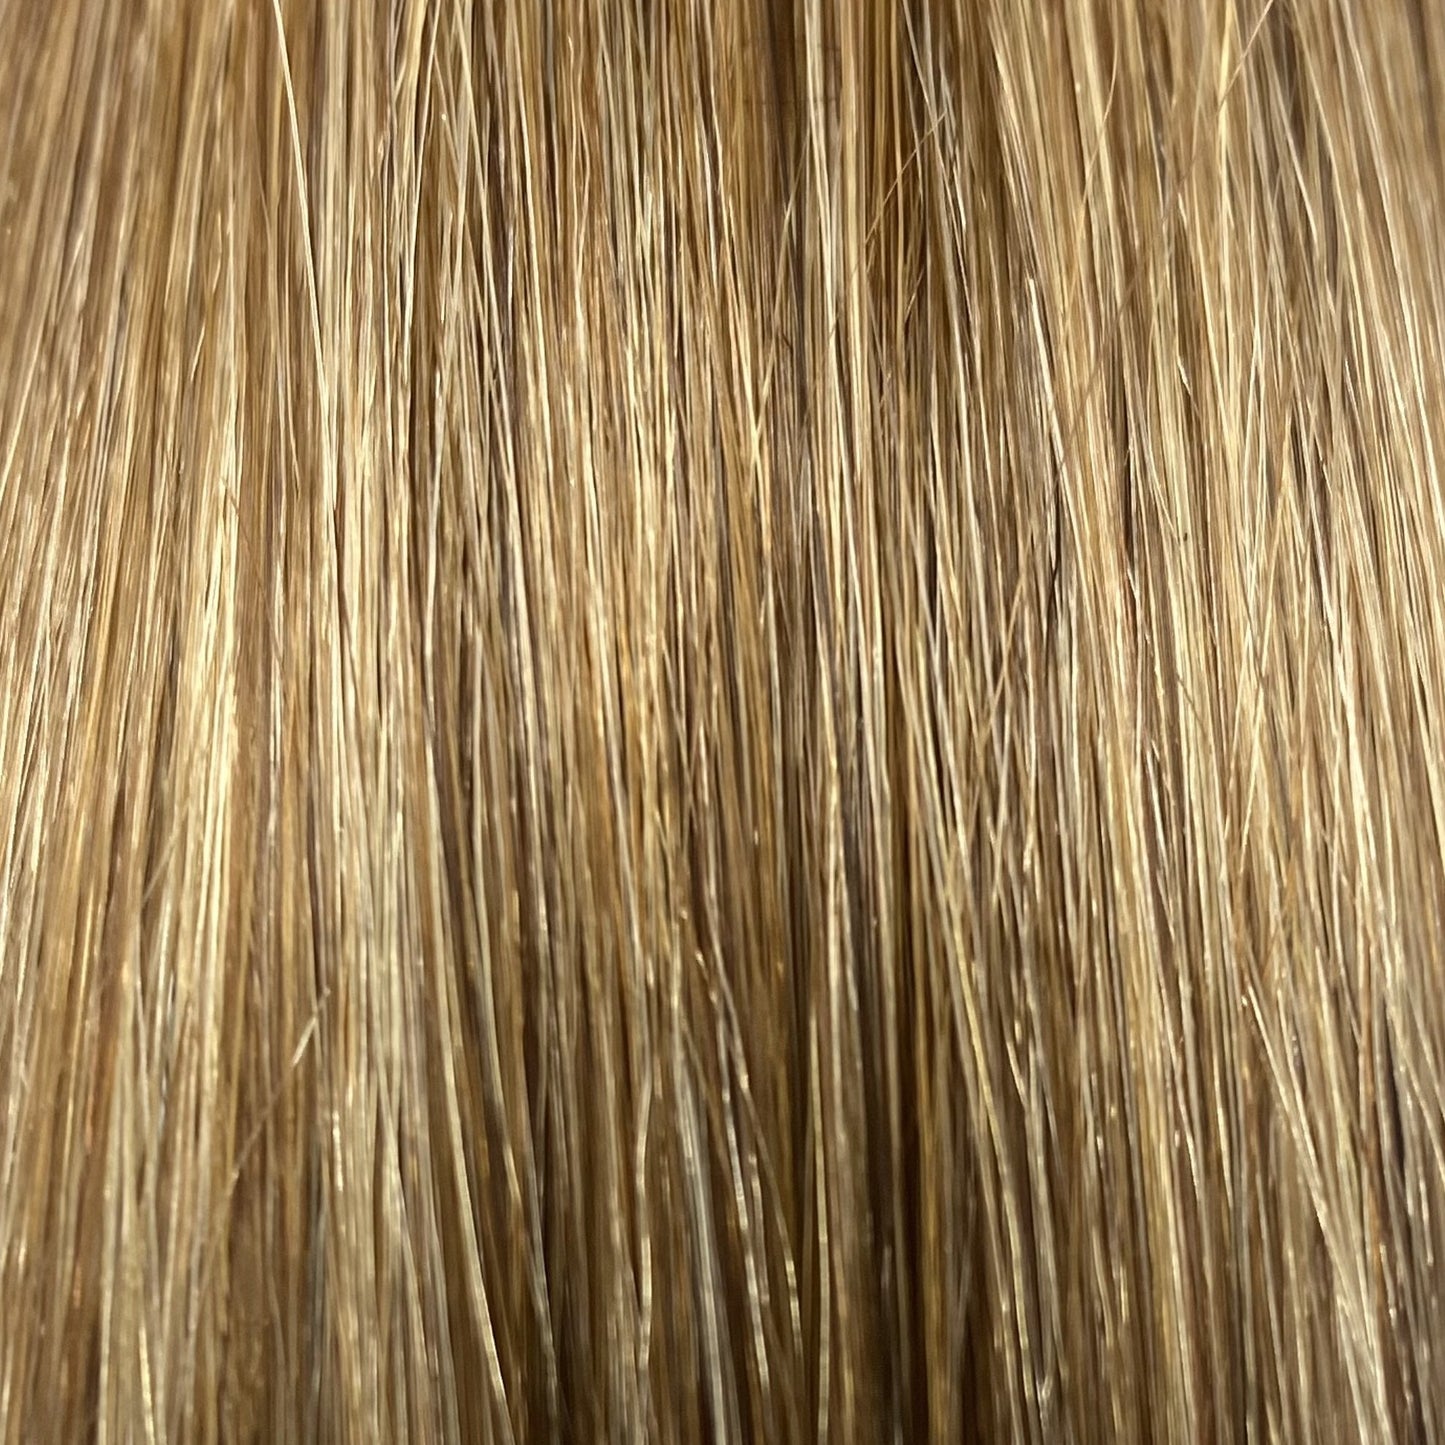 Fusion hair extensions #18/24 - 40cm/16 inches - Dark Blonde/Ash Blonde Fusion Euro So Cap 